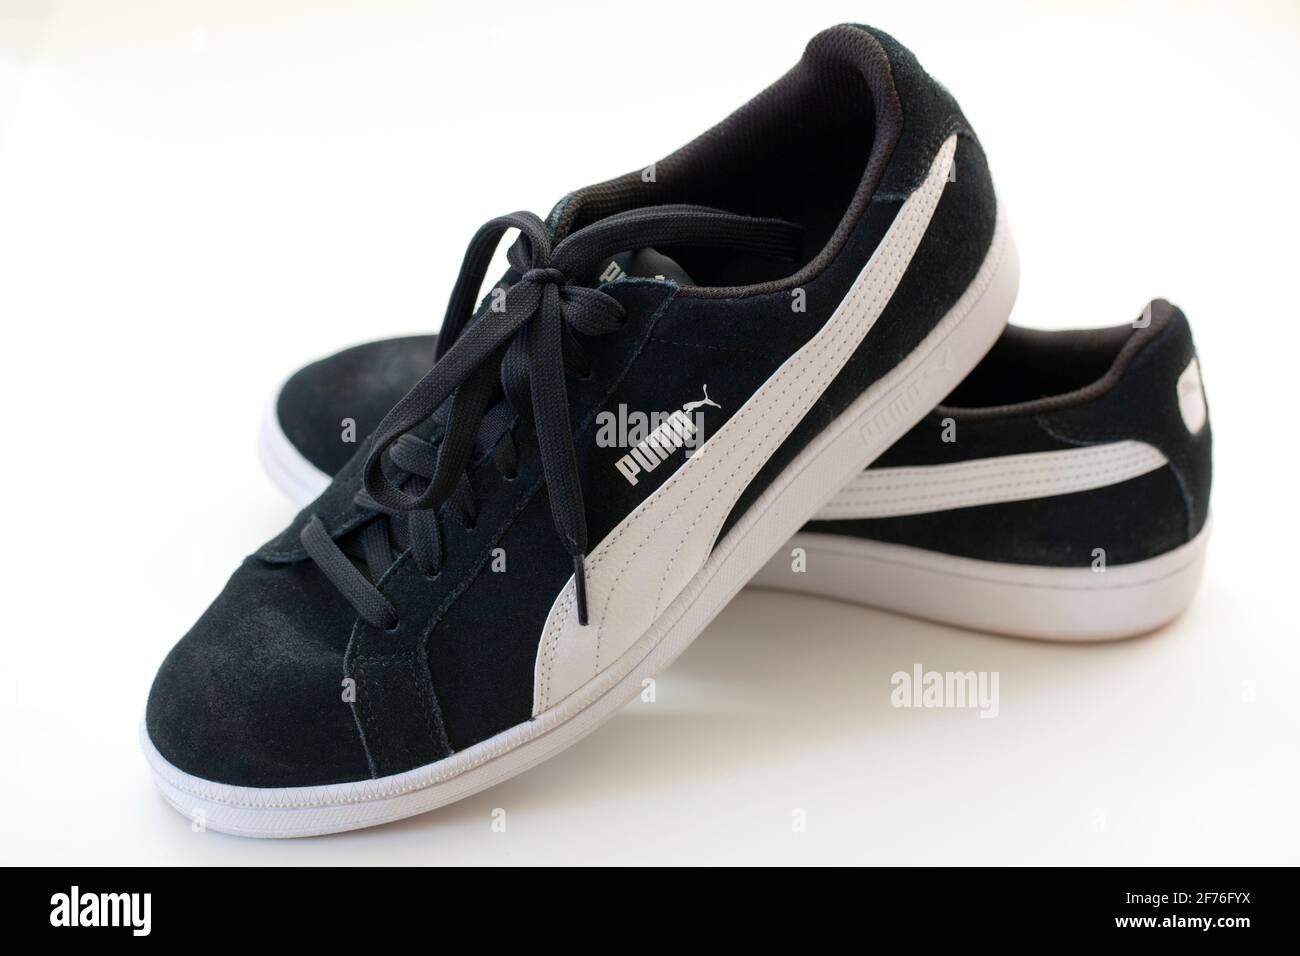 Puma Classic black suede sneakers - USA Stock Photo - Alamy